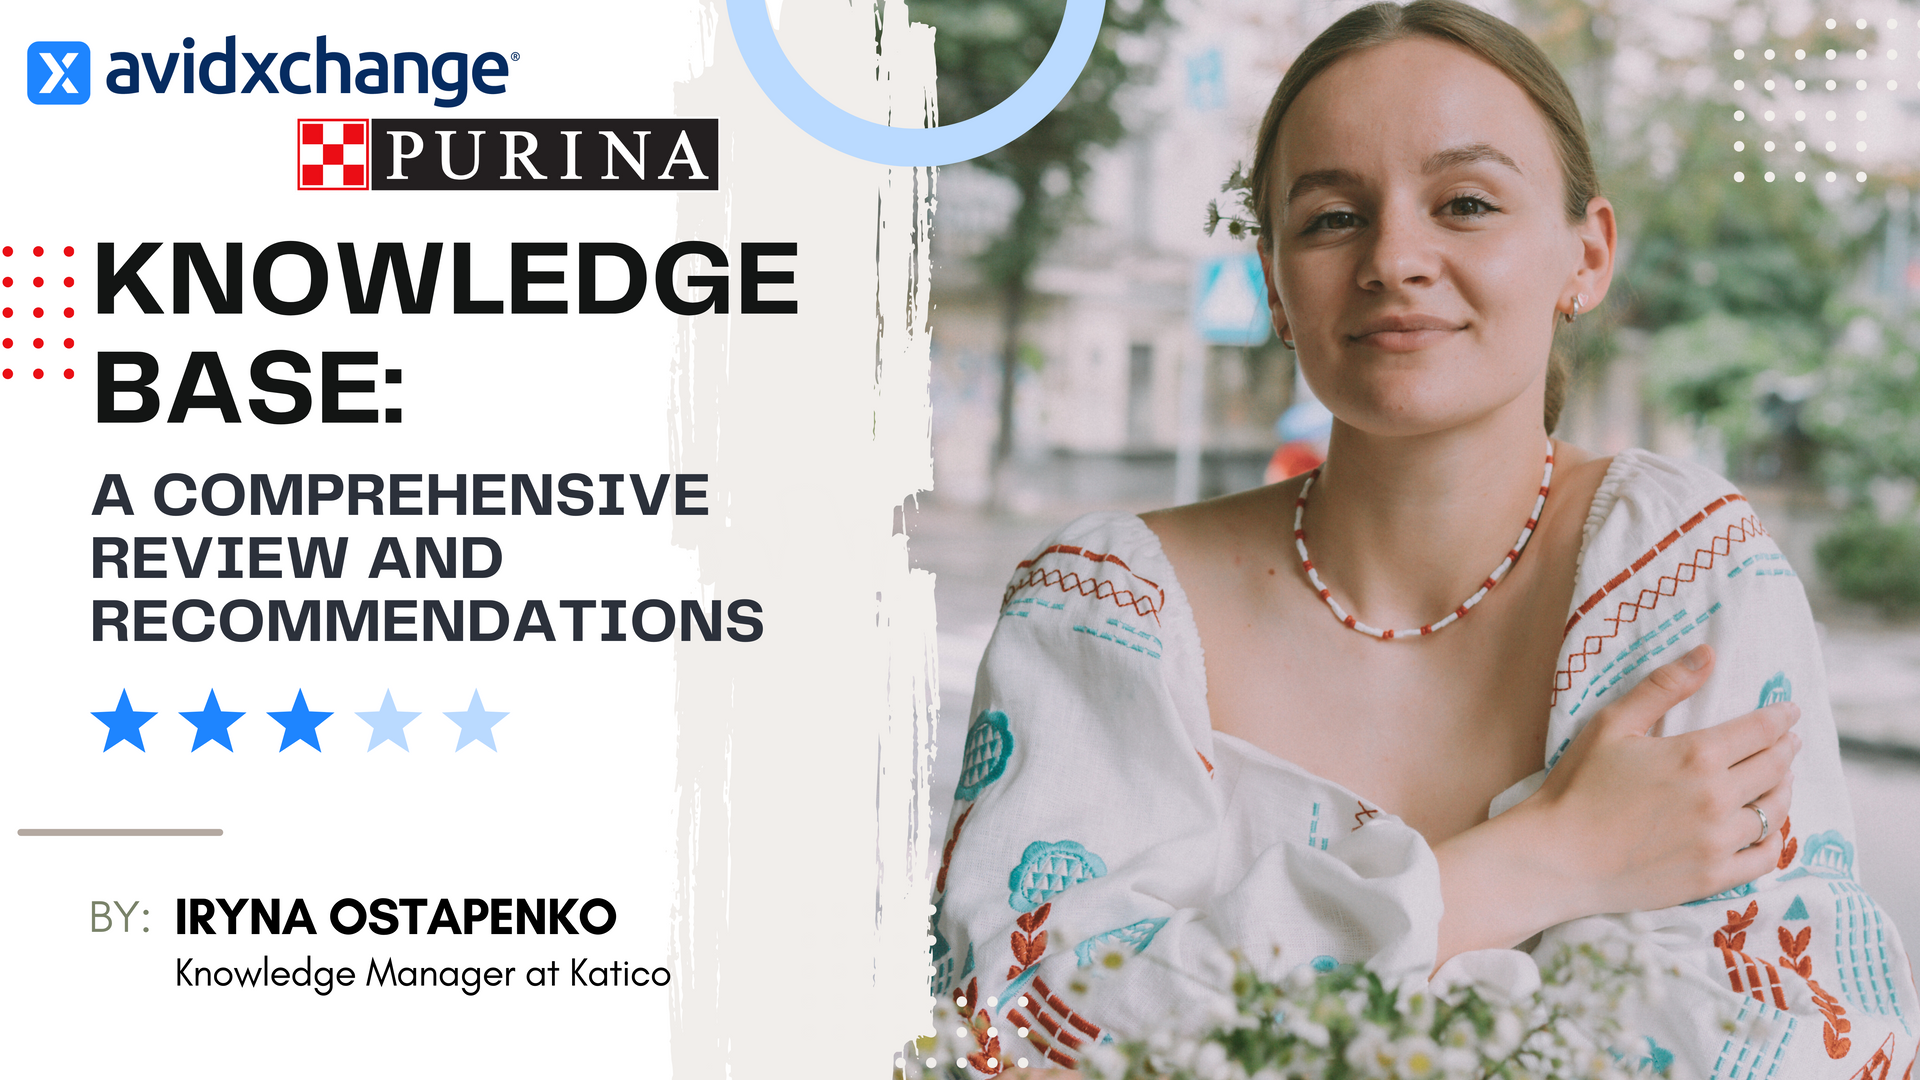 Iryna Ostapenko, Knowledge Manager at Katico